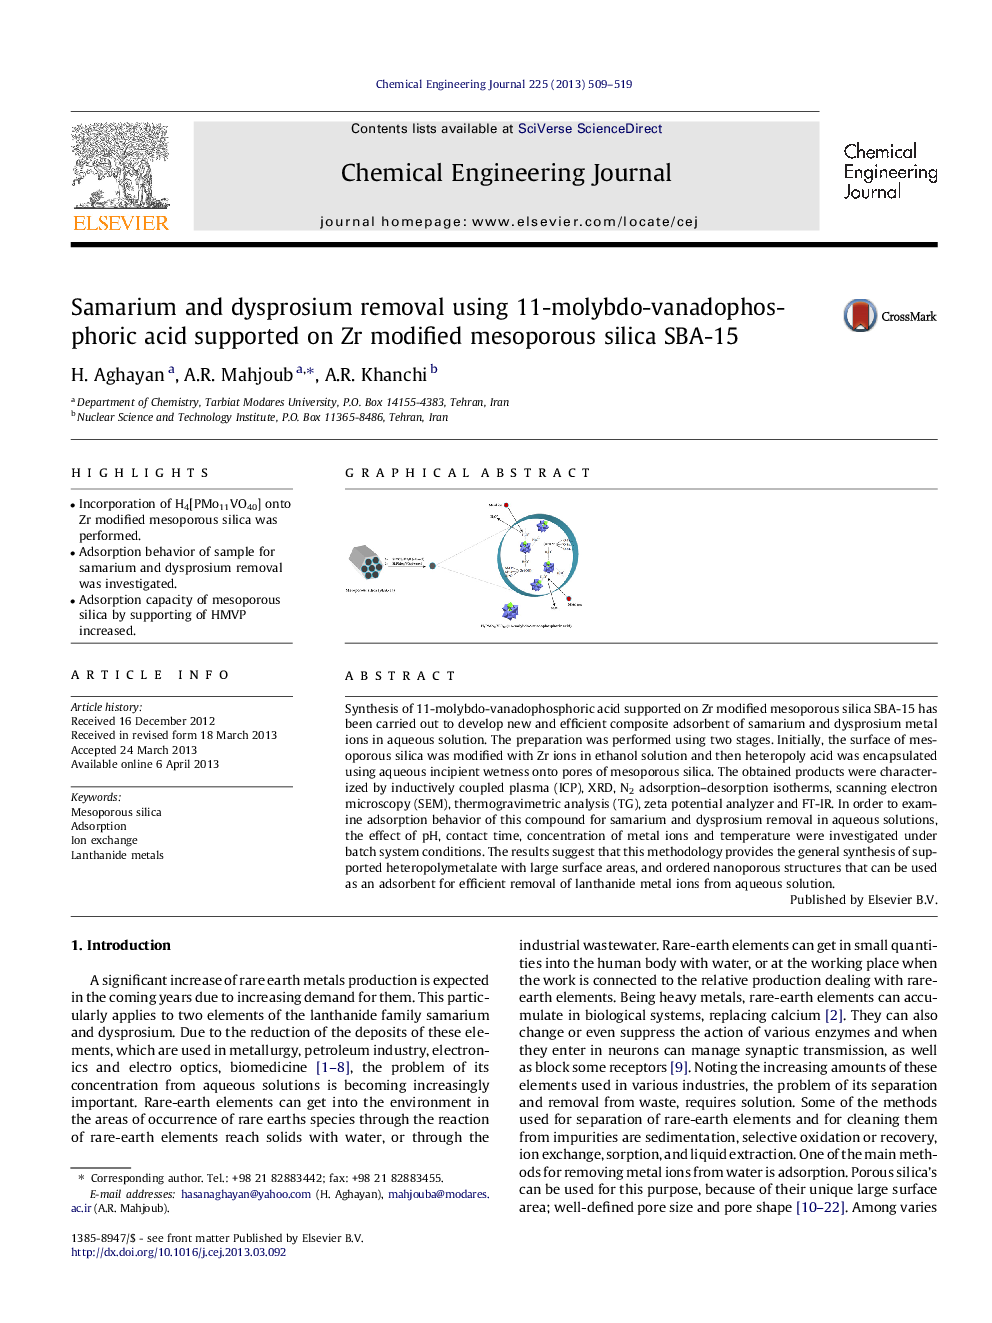 Samarium and dysprosium removal using 11-molybdo-vanadophosphoric acid supported on Zr modified mesoporous silica SBA-15